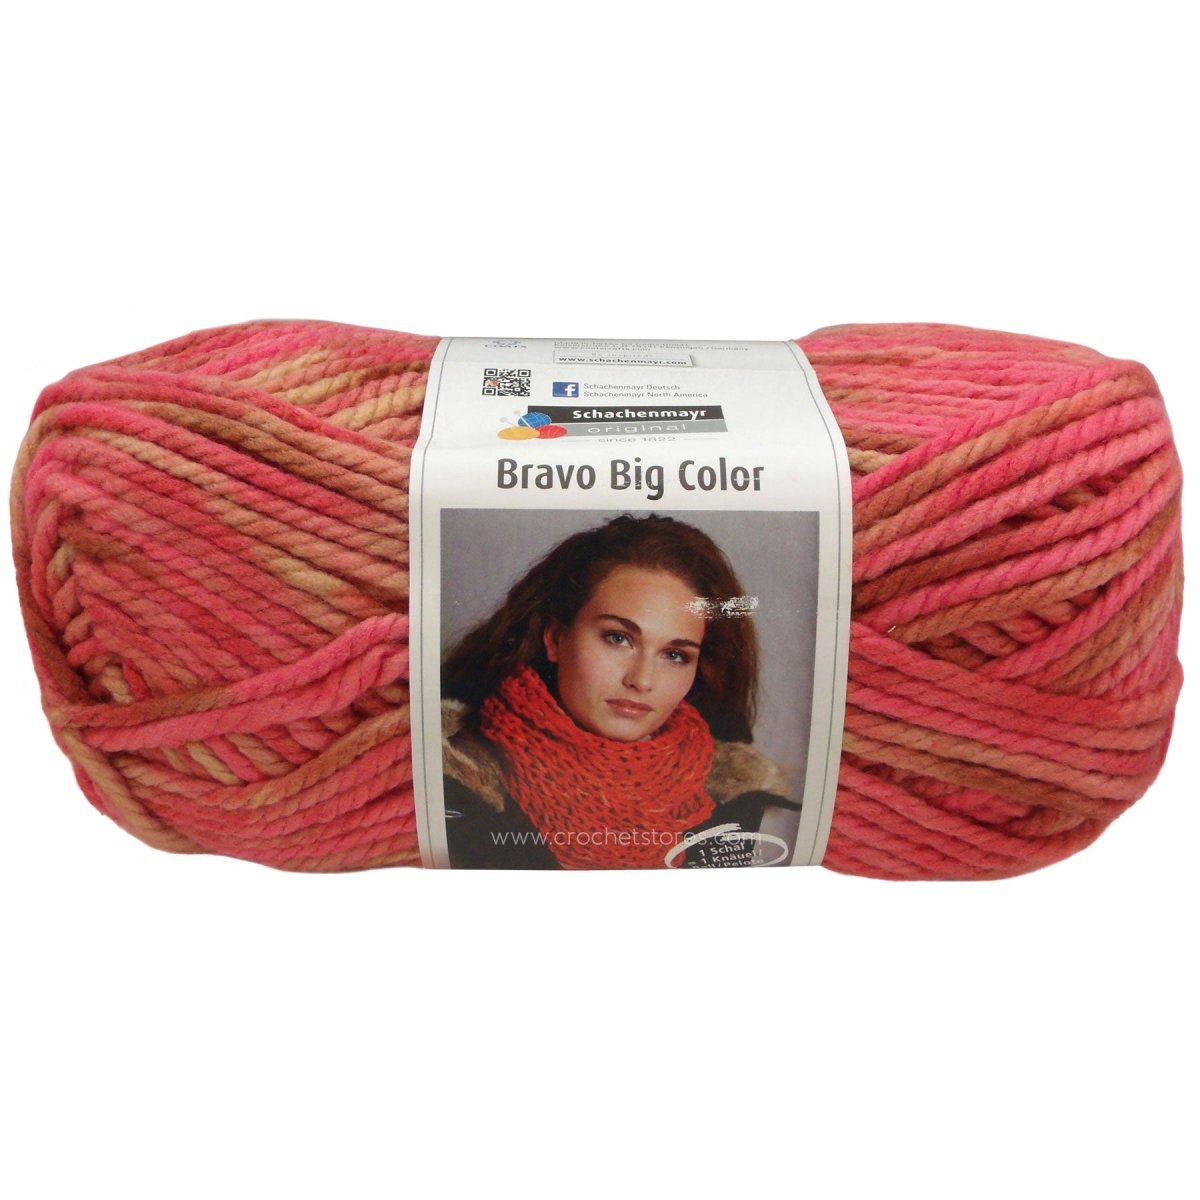 BRAVO BIG COLOR - Crochetstores9807720-824082700932726